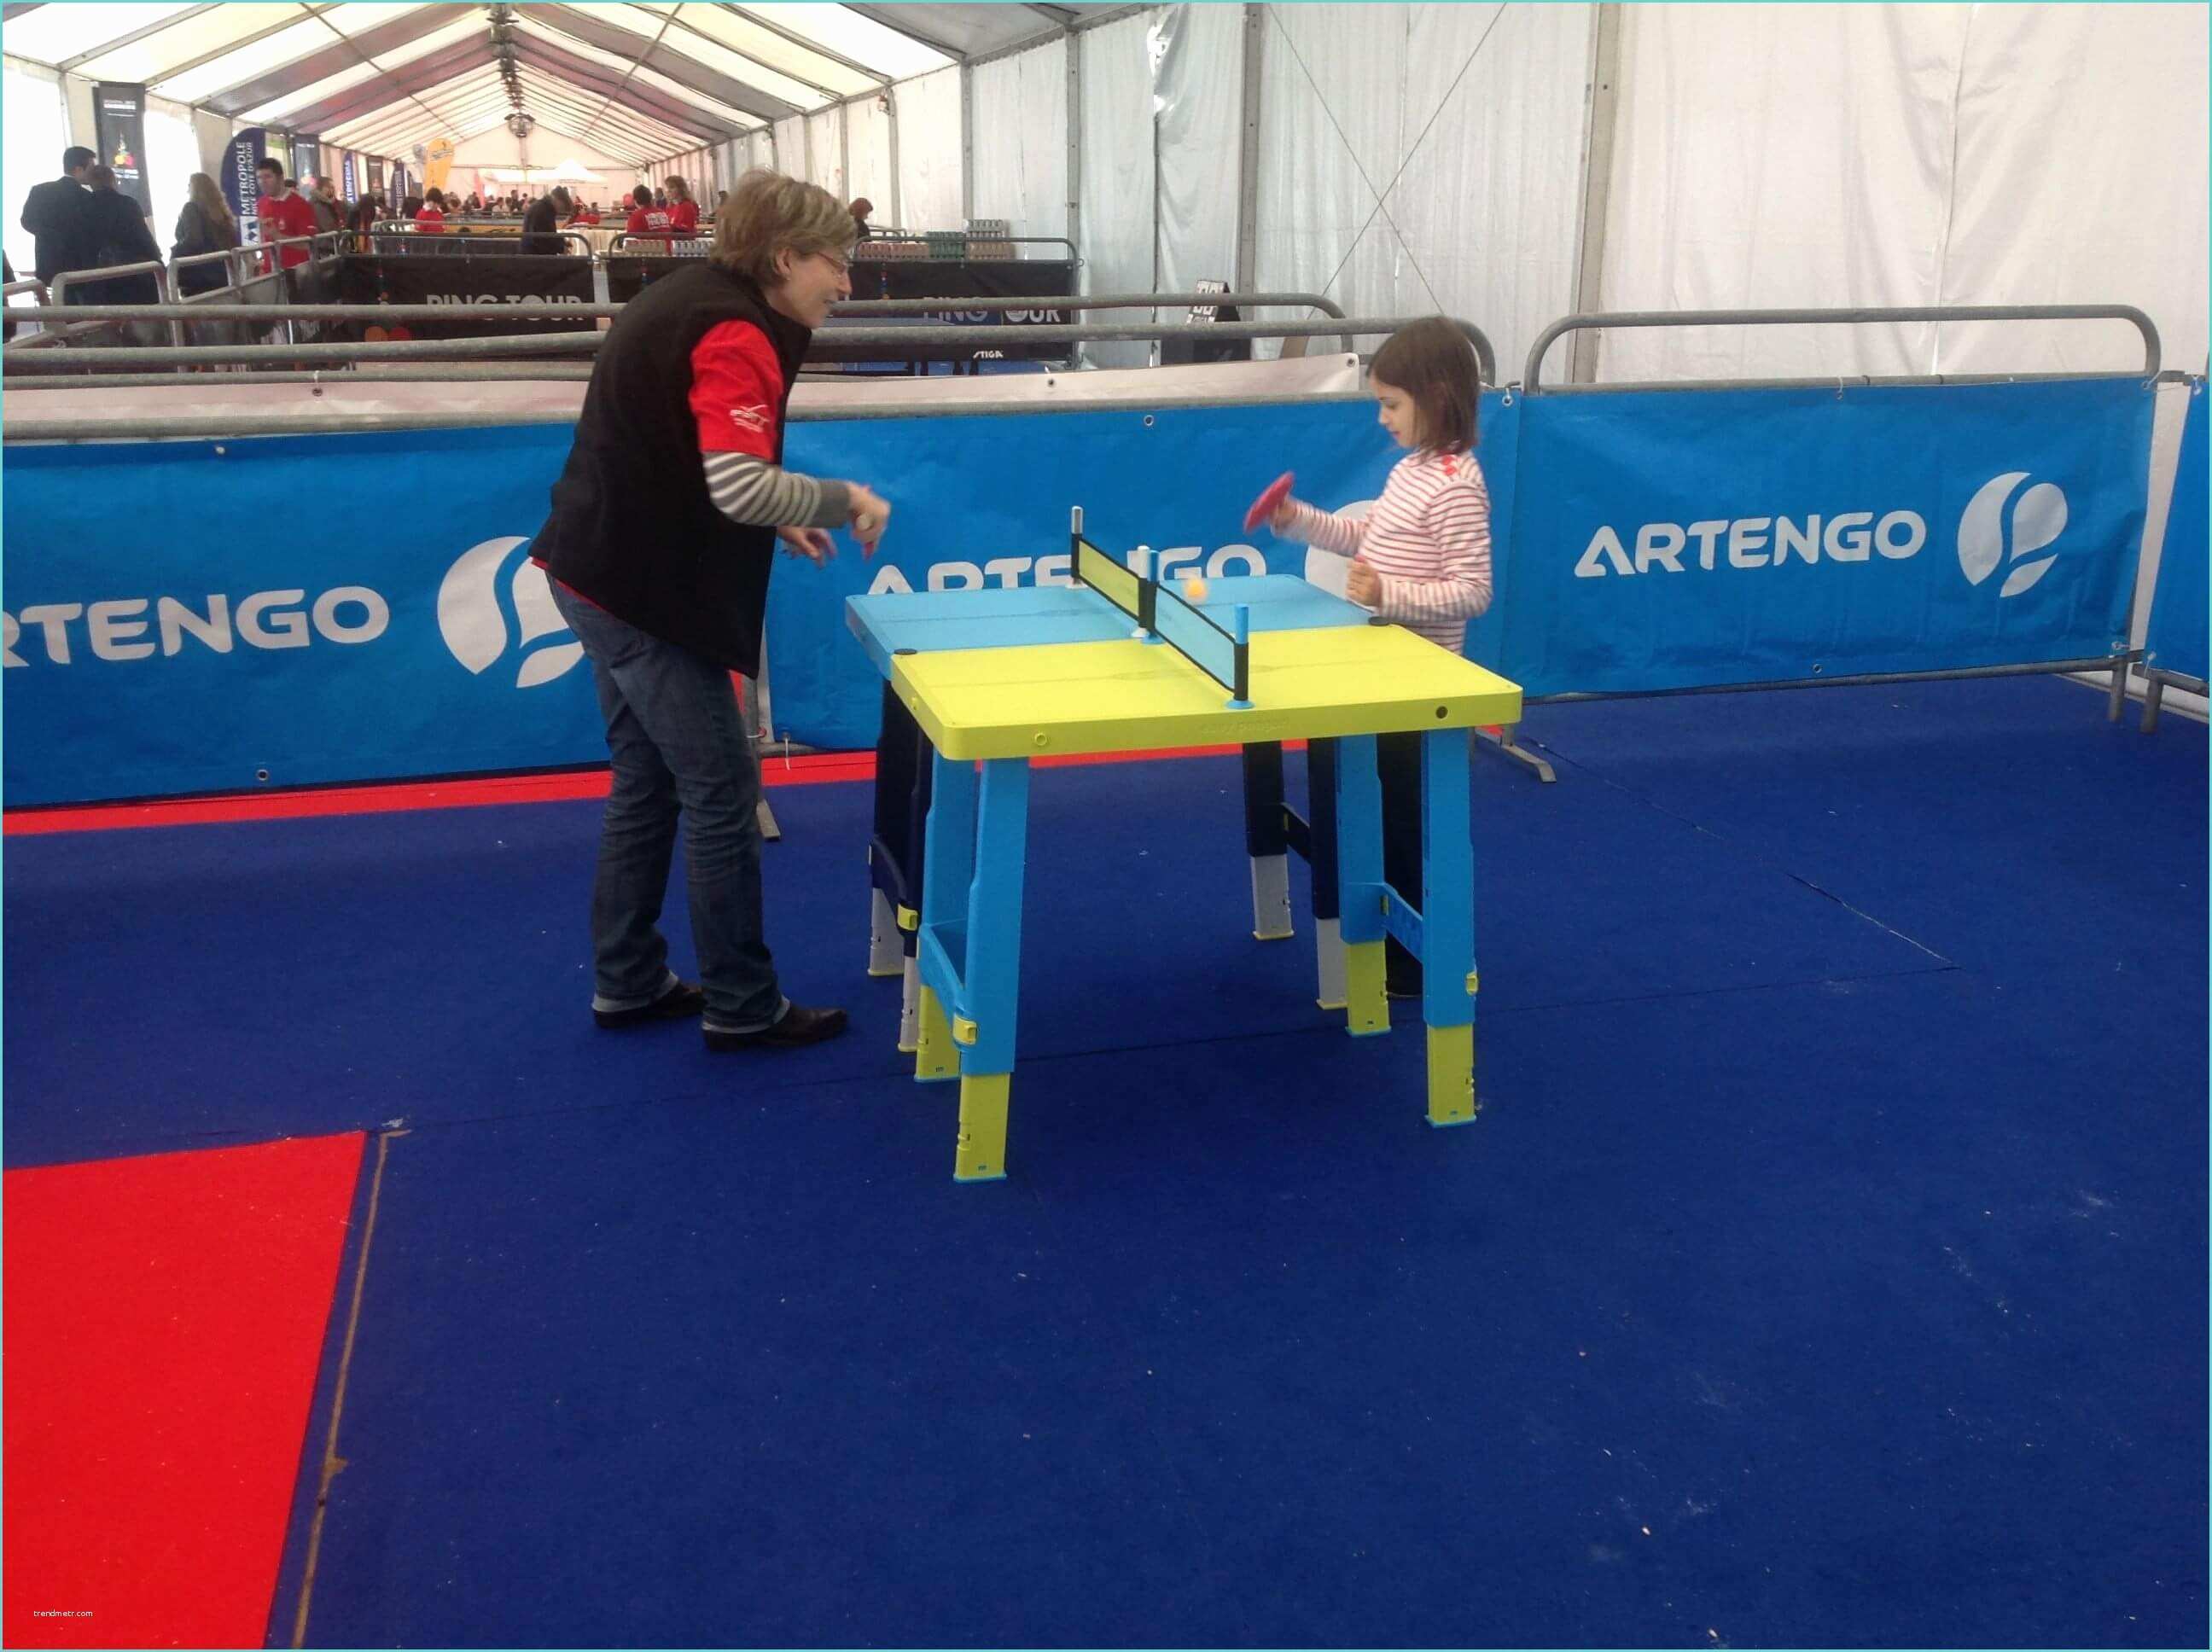 Fabriquer Table Ping Pong Table De Ping Pong Decathlon Best Fabriquer Une Table